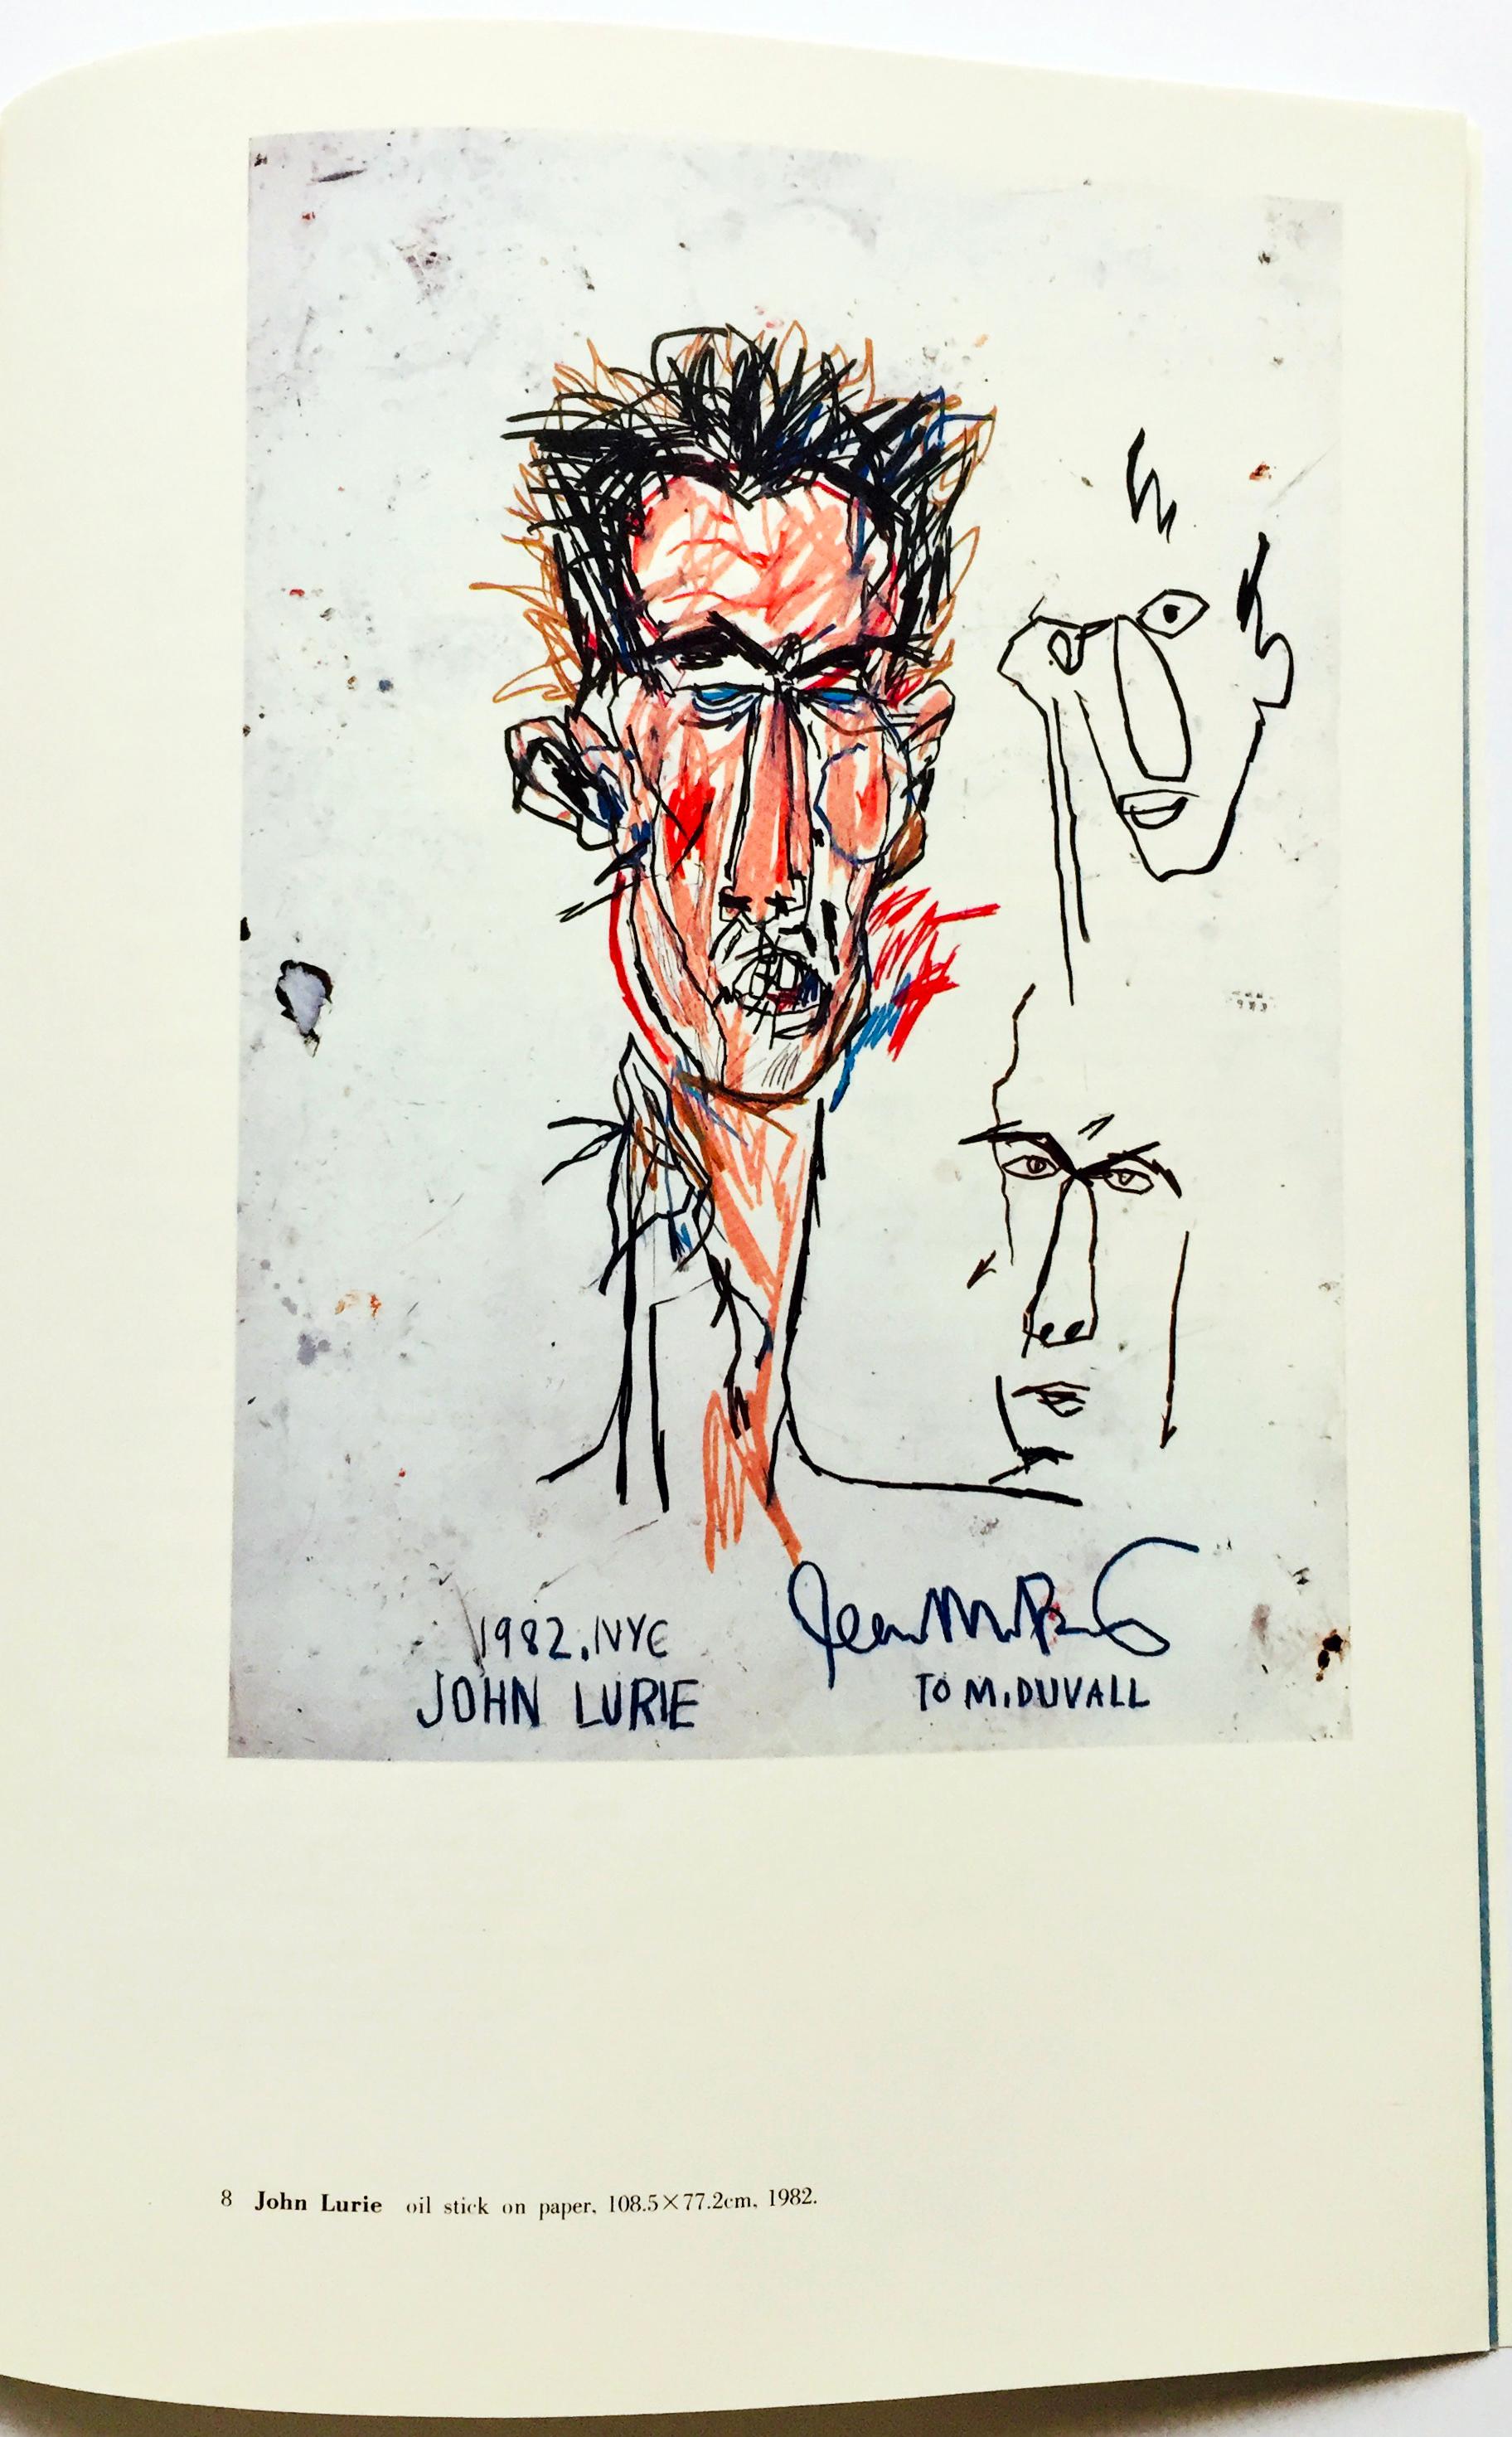 Basquiat Tokyo exhibit catalog 1987 (Basquiat PS Gallery 1987) - Pop Art Print by after Jean-Michel Basquiat